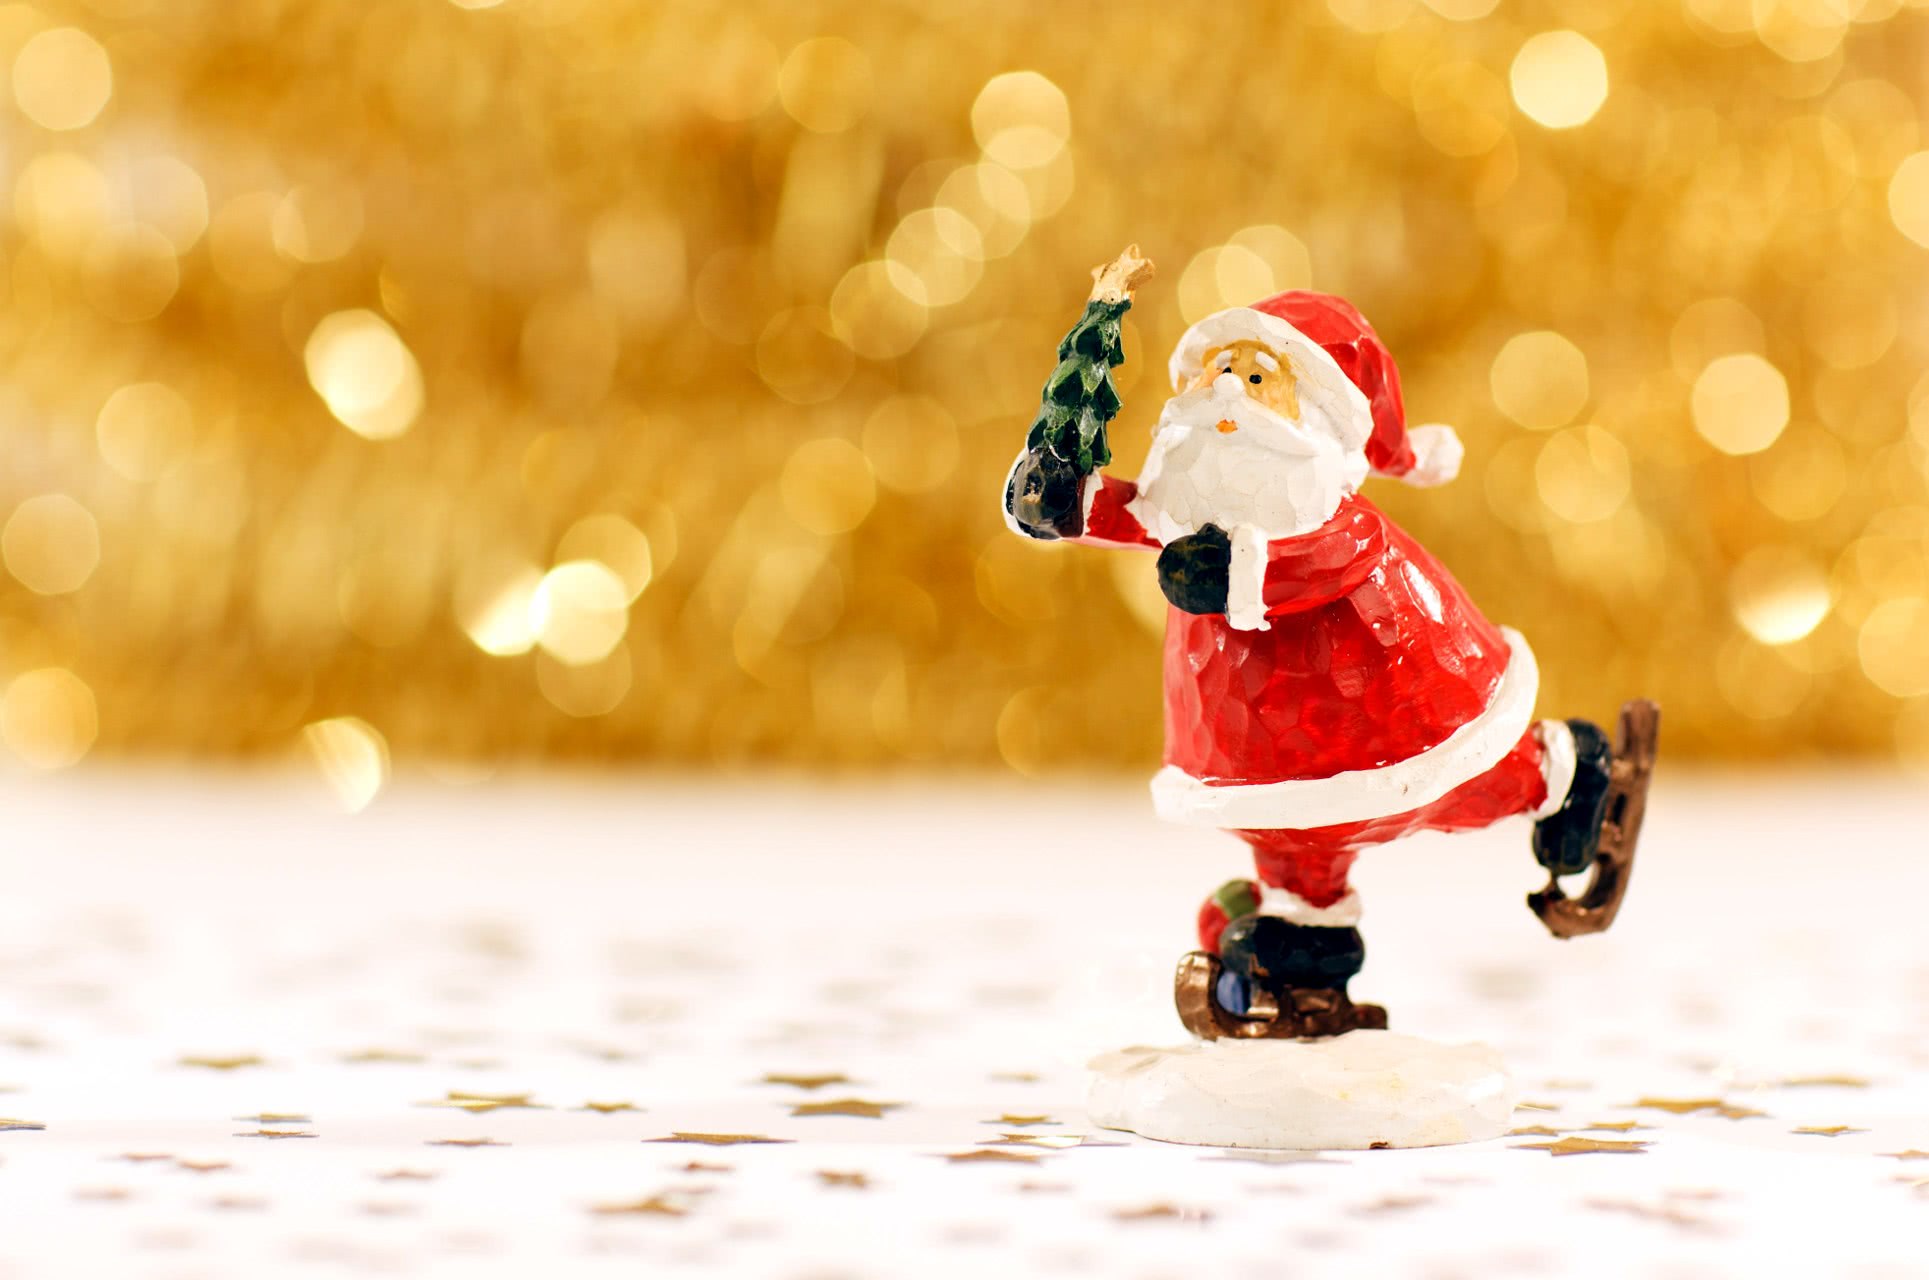 Santa skating figurine